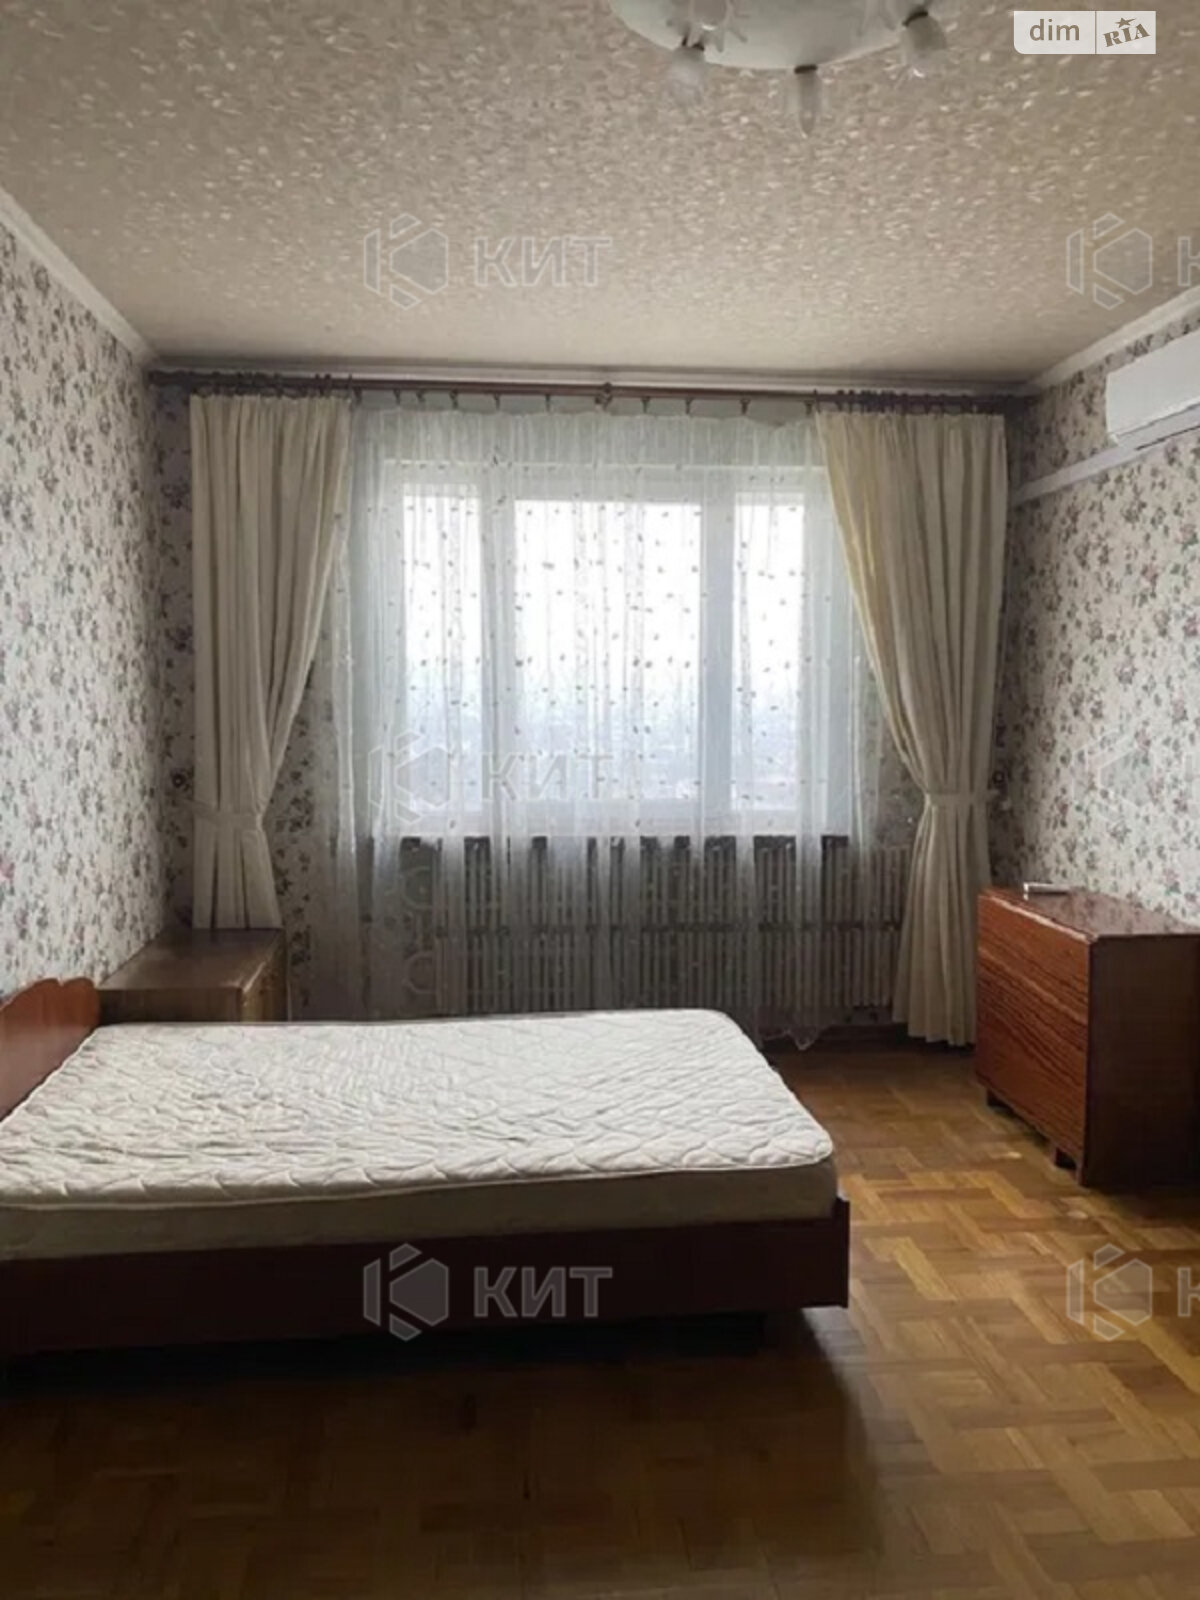 Продажа трехкомнатной квартиры в Харькове, на ул. Матюшенко 3, район Журавлевка фото 1